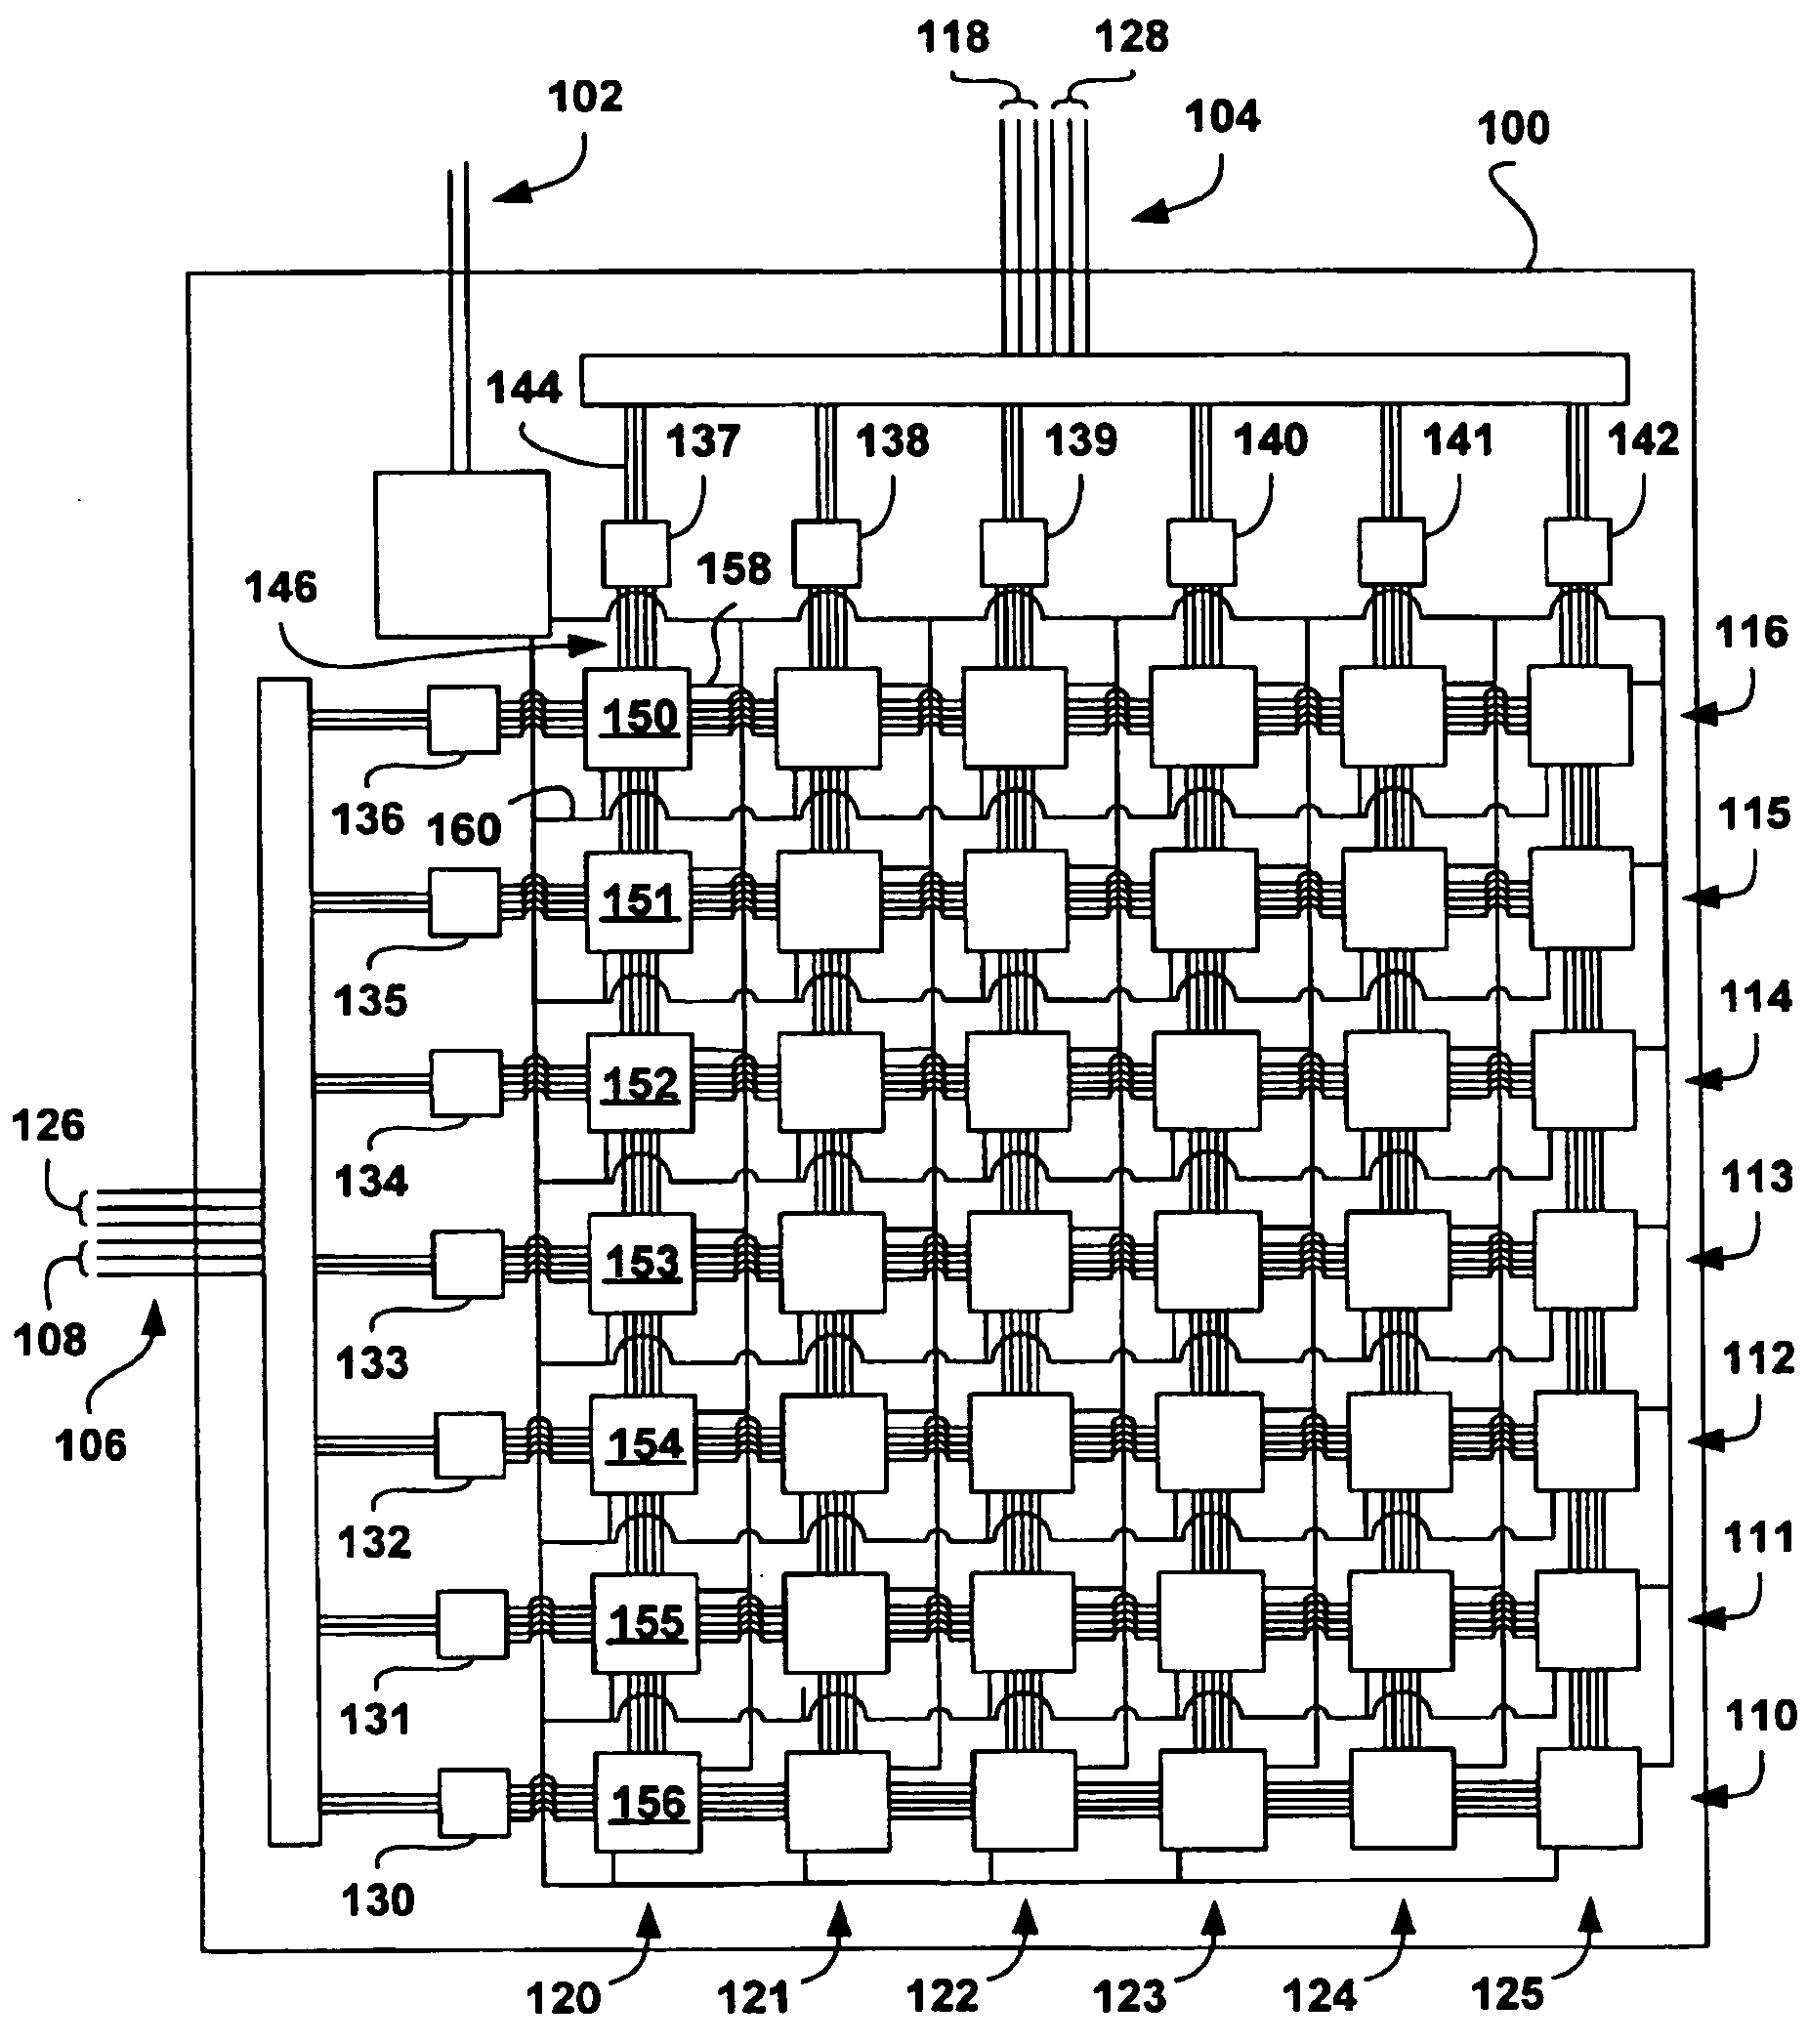 Defect-tolerant and fault-tolerant circuit interconnections